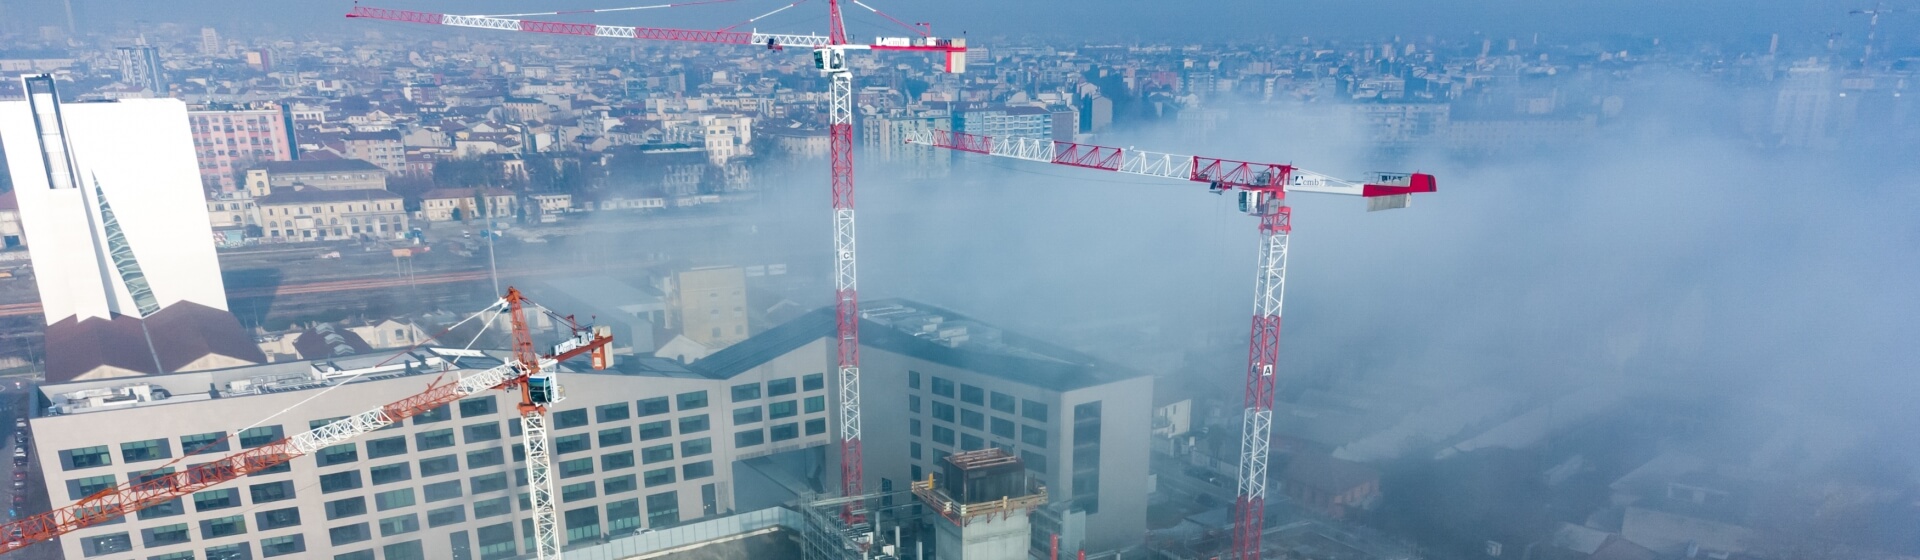 Three-Potain-cranes-deployed-for-Symbiosis-urban-regeneration-project-in-Milan-Italy-04.jpg